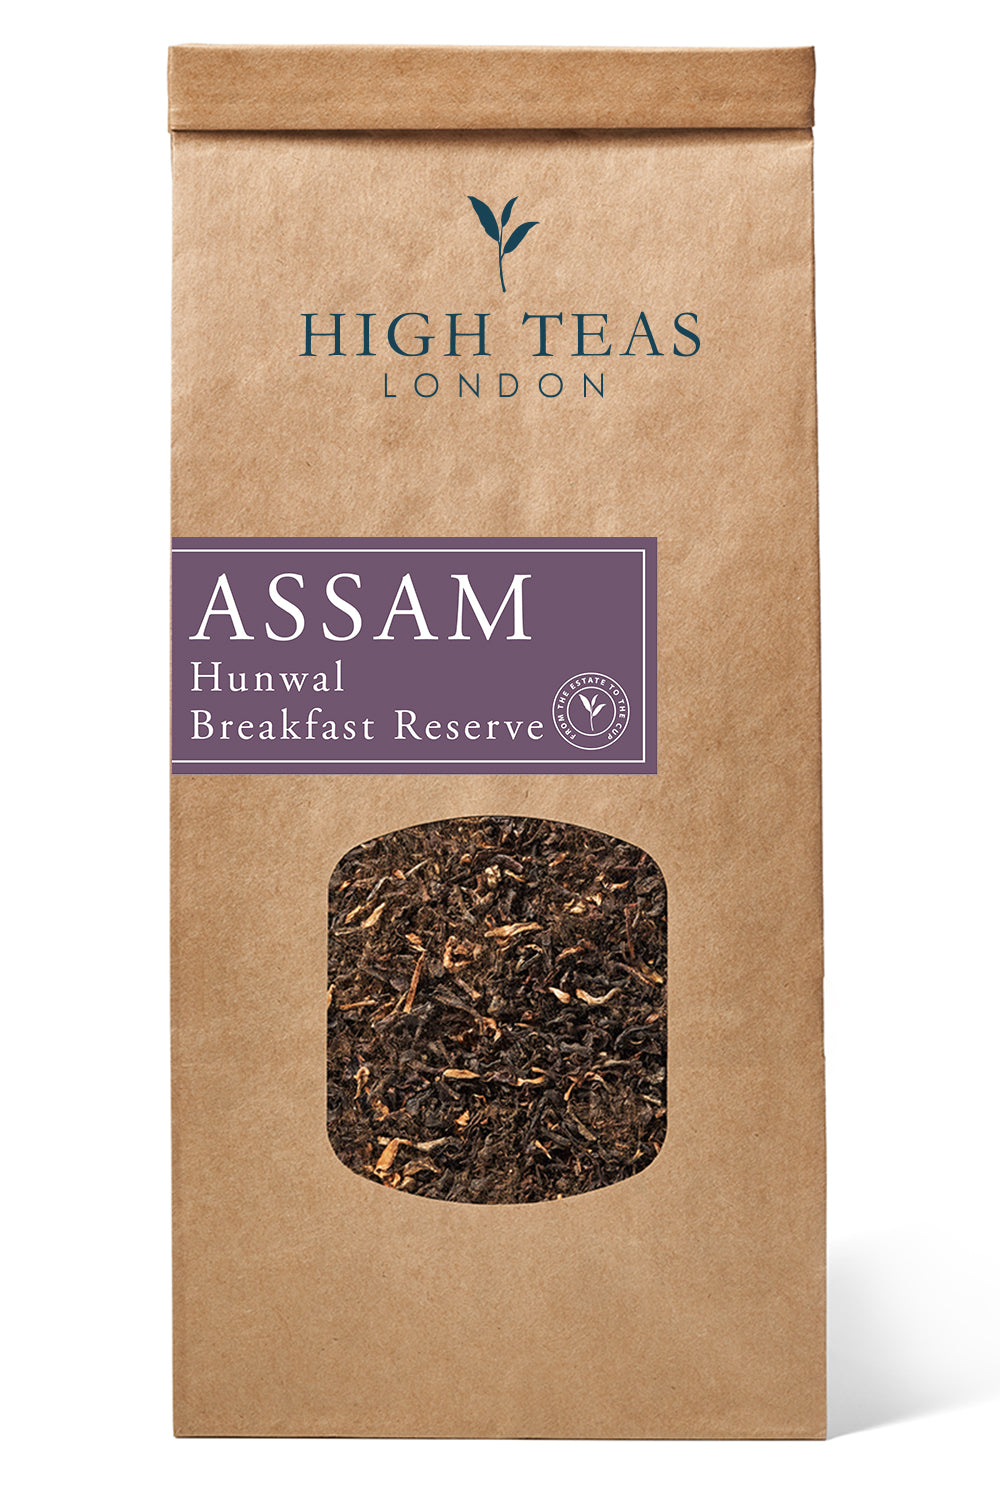 Assam Hunwal Breakfast Reserve-250g-Loose Leaf Tea-High Teas